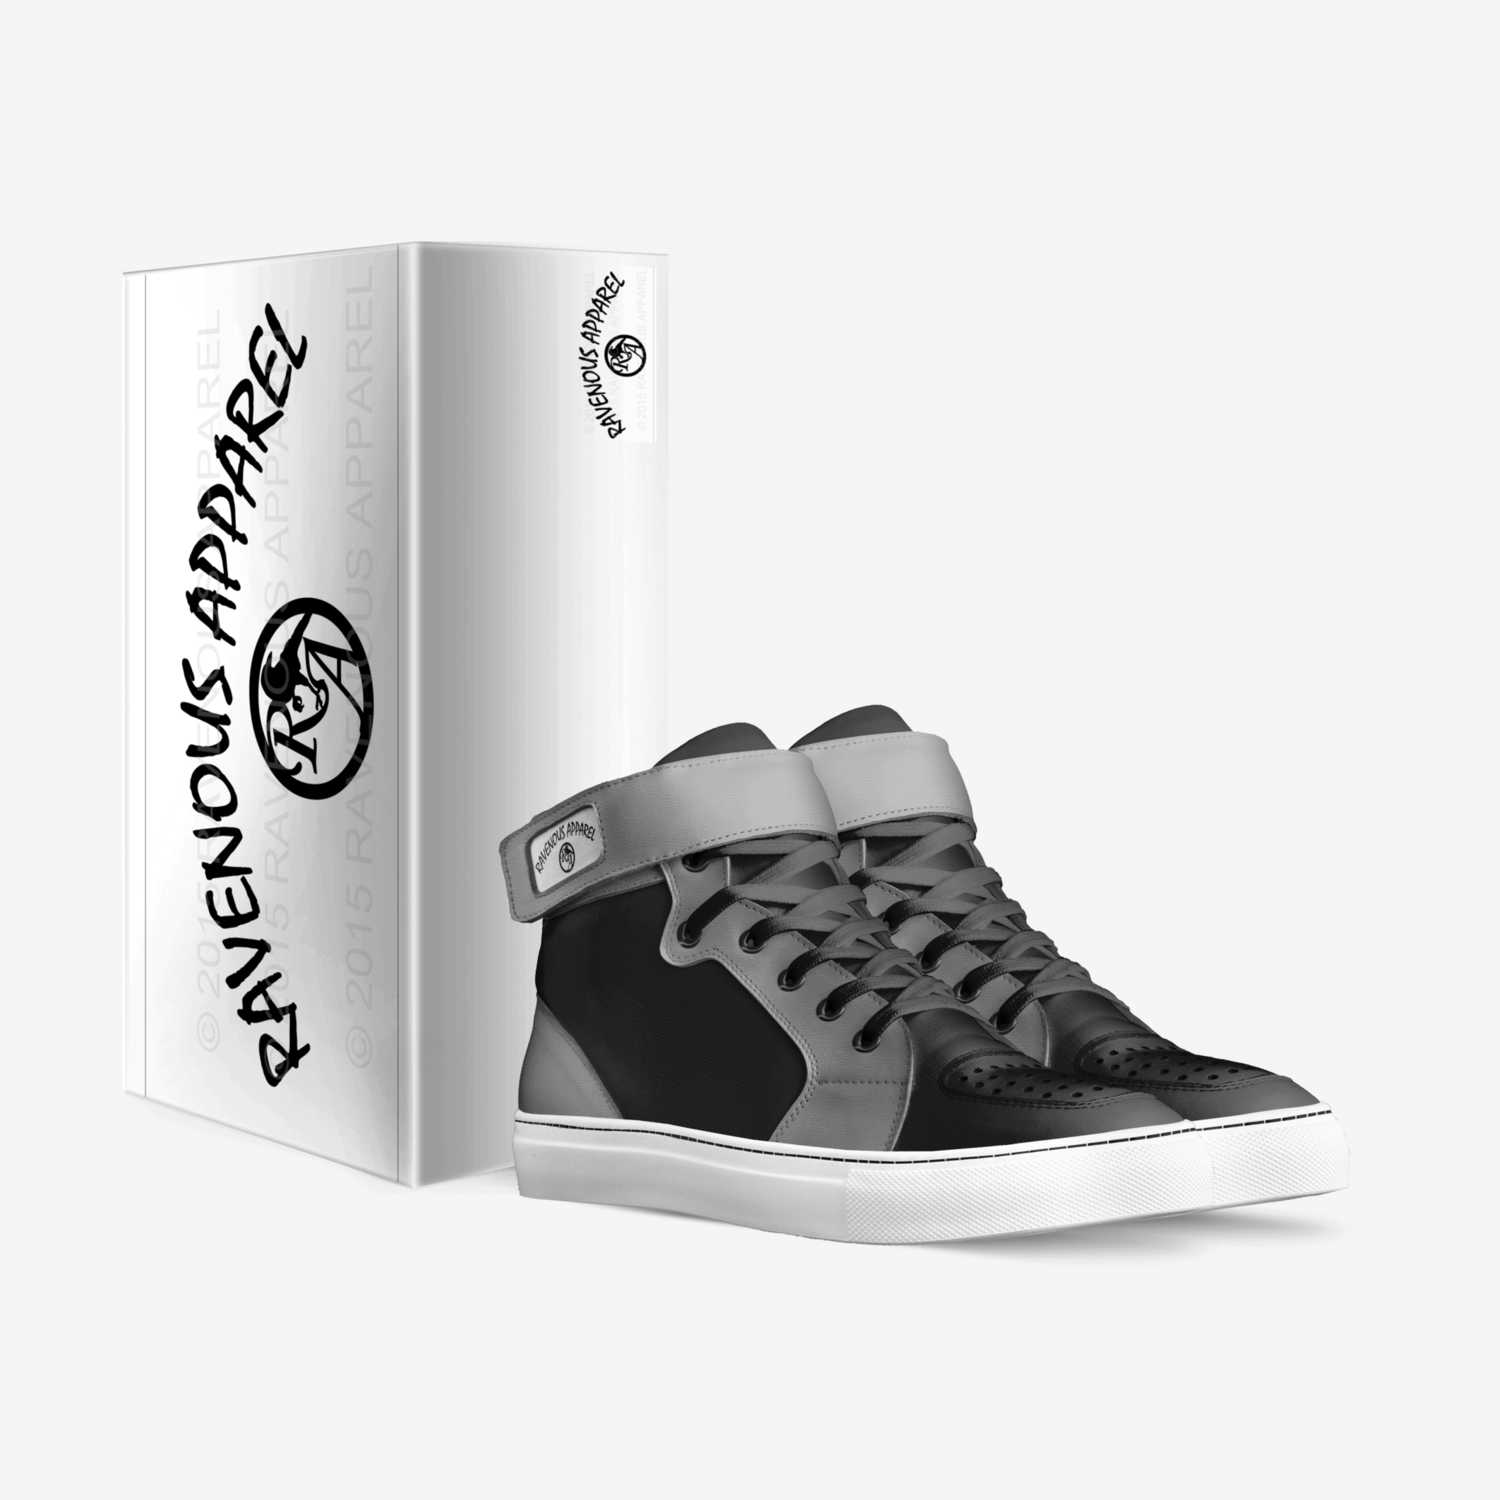 RA/BG custom made in Italy shoes by Thomas Rodriguez | Box view